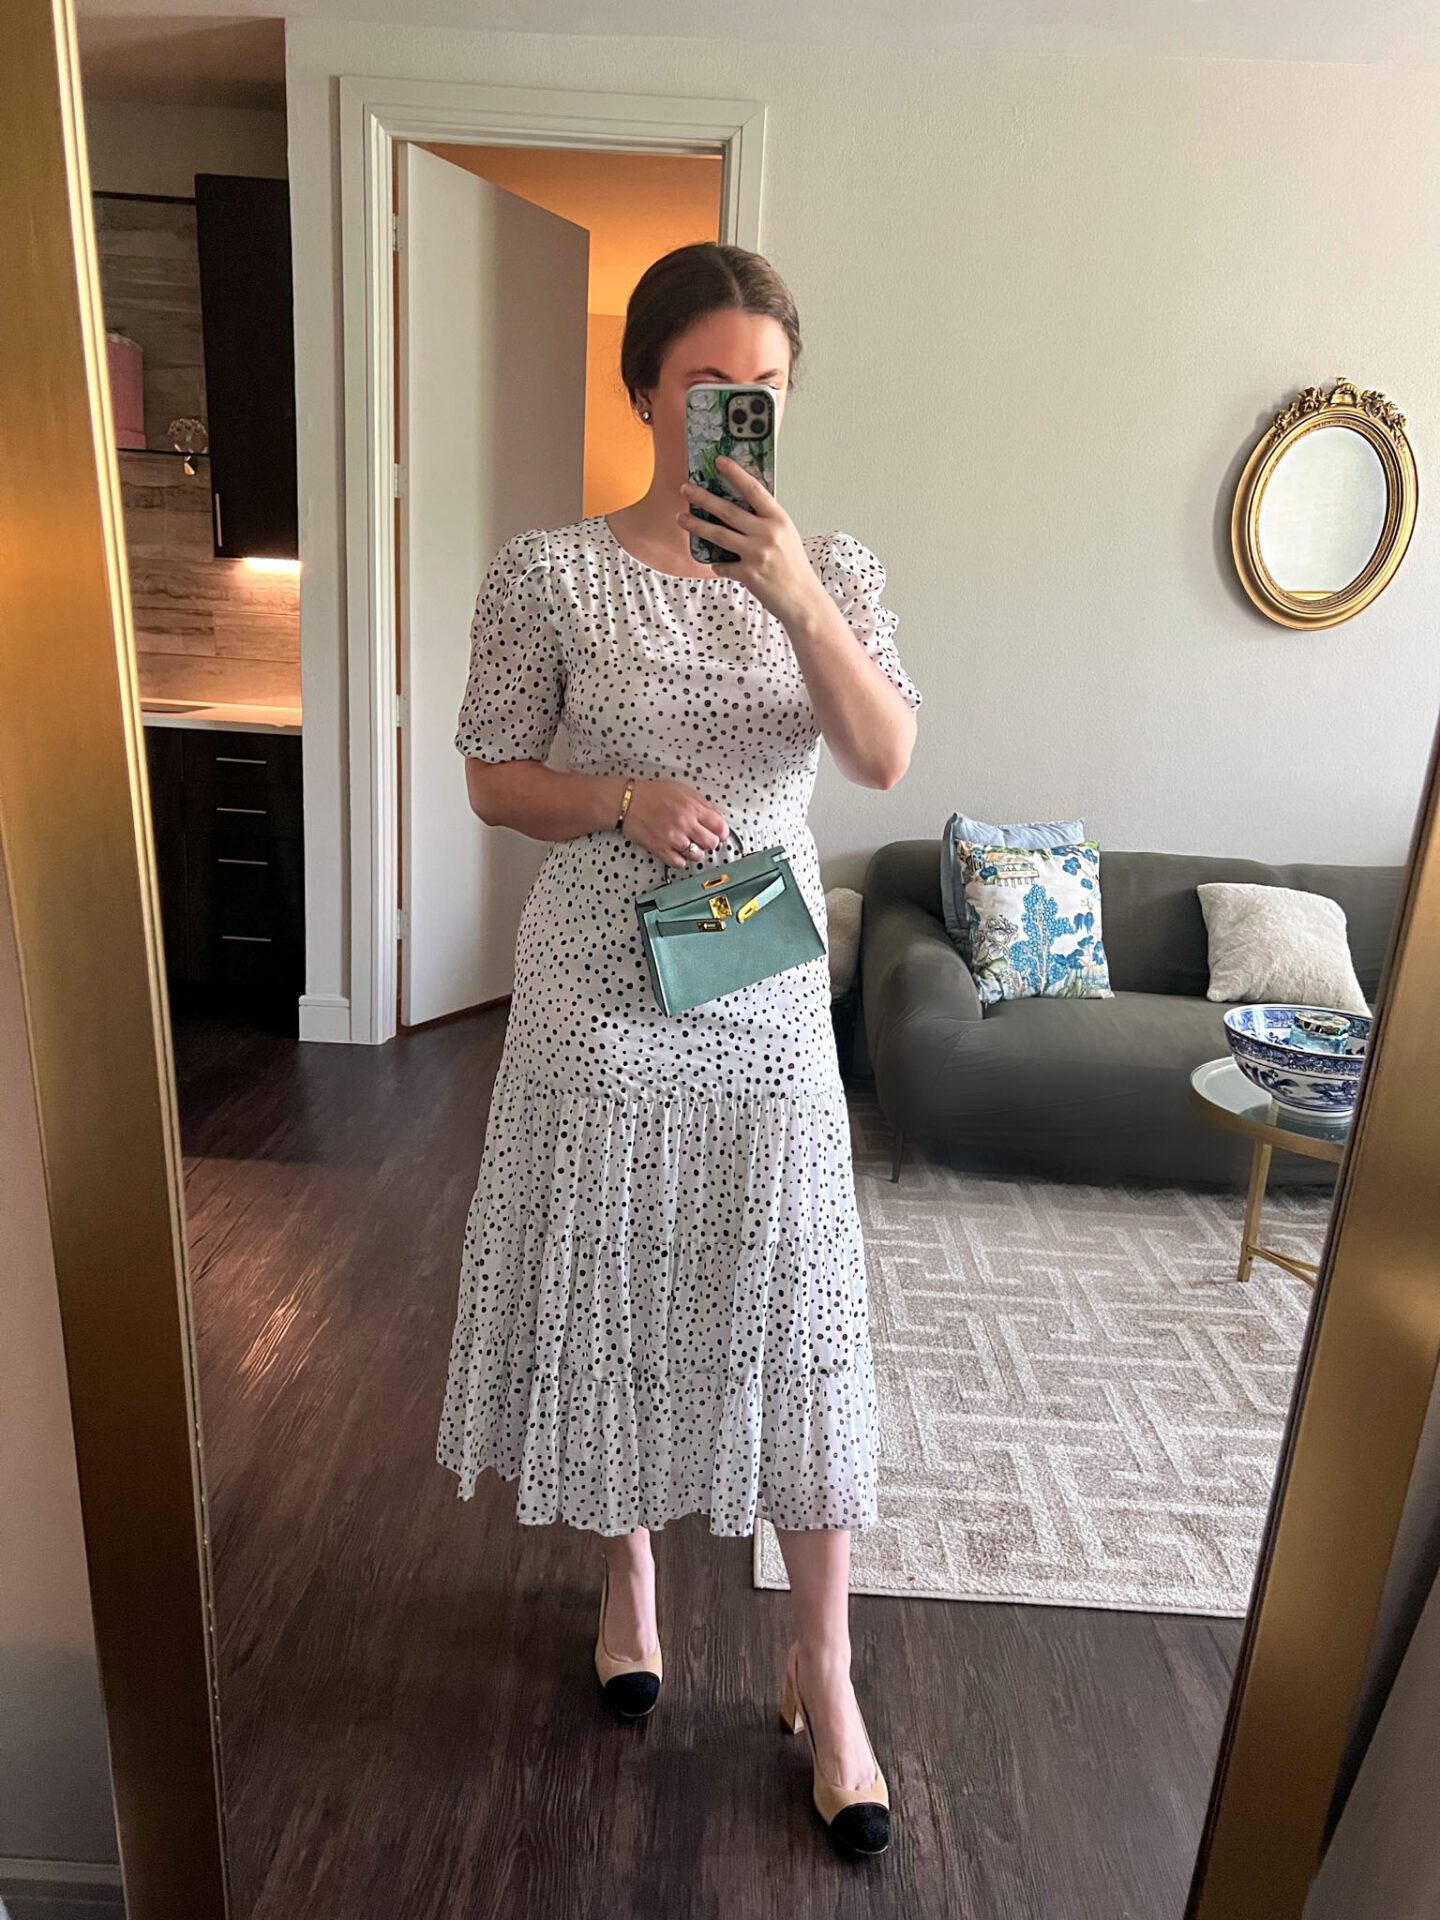 Dallas fashion blogger shares Sofia Richie style for summer